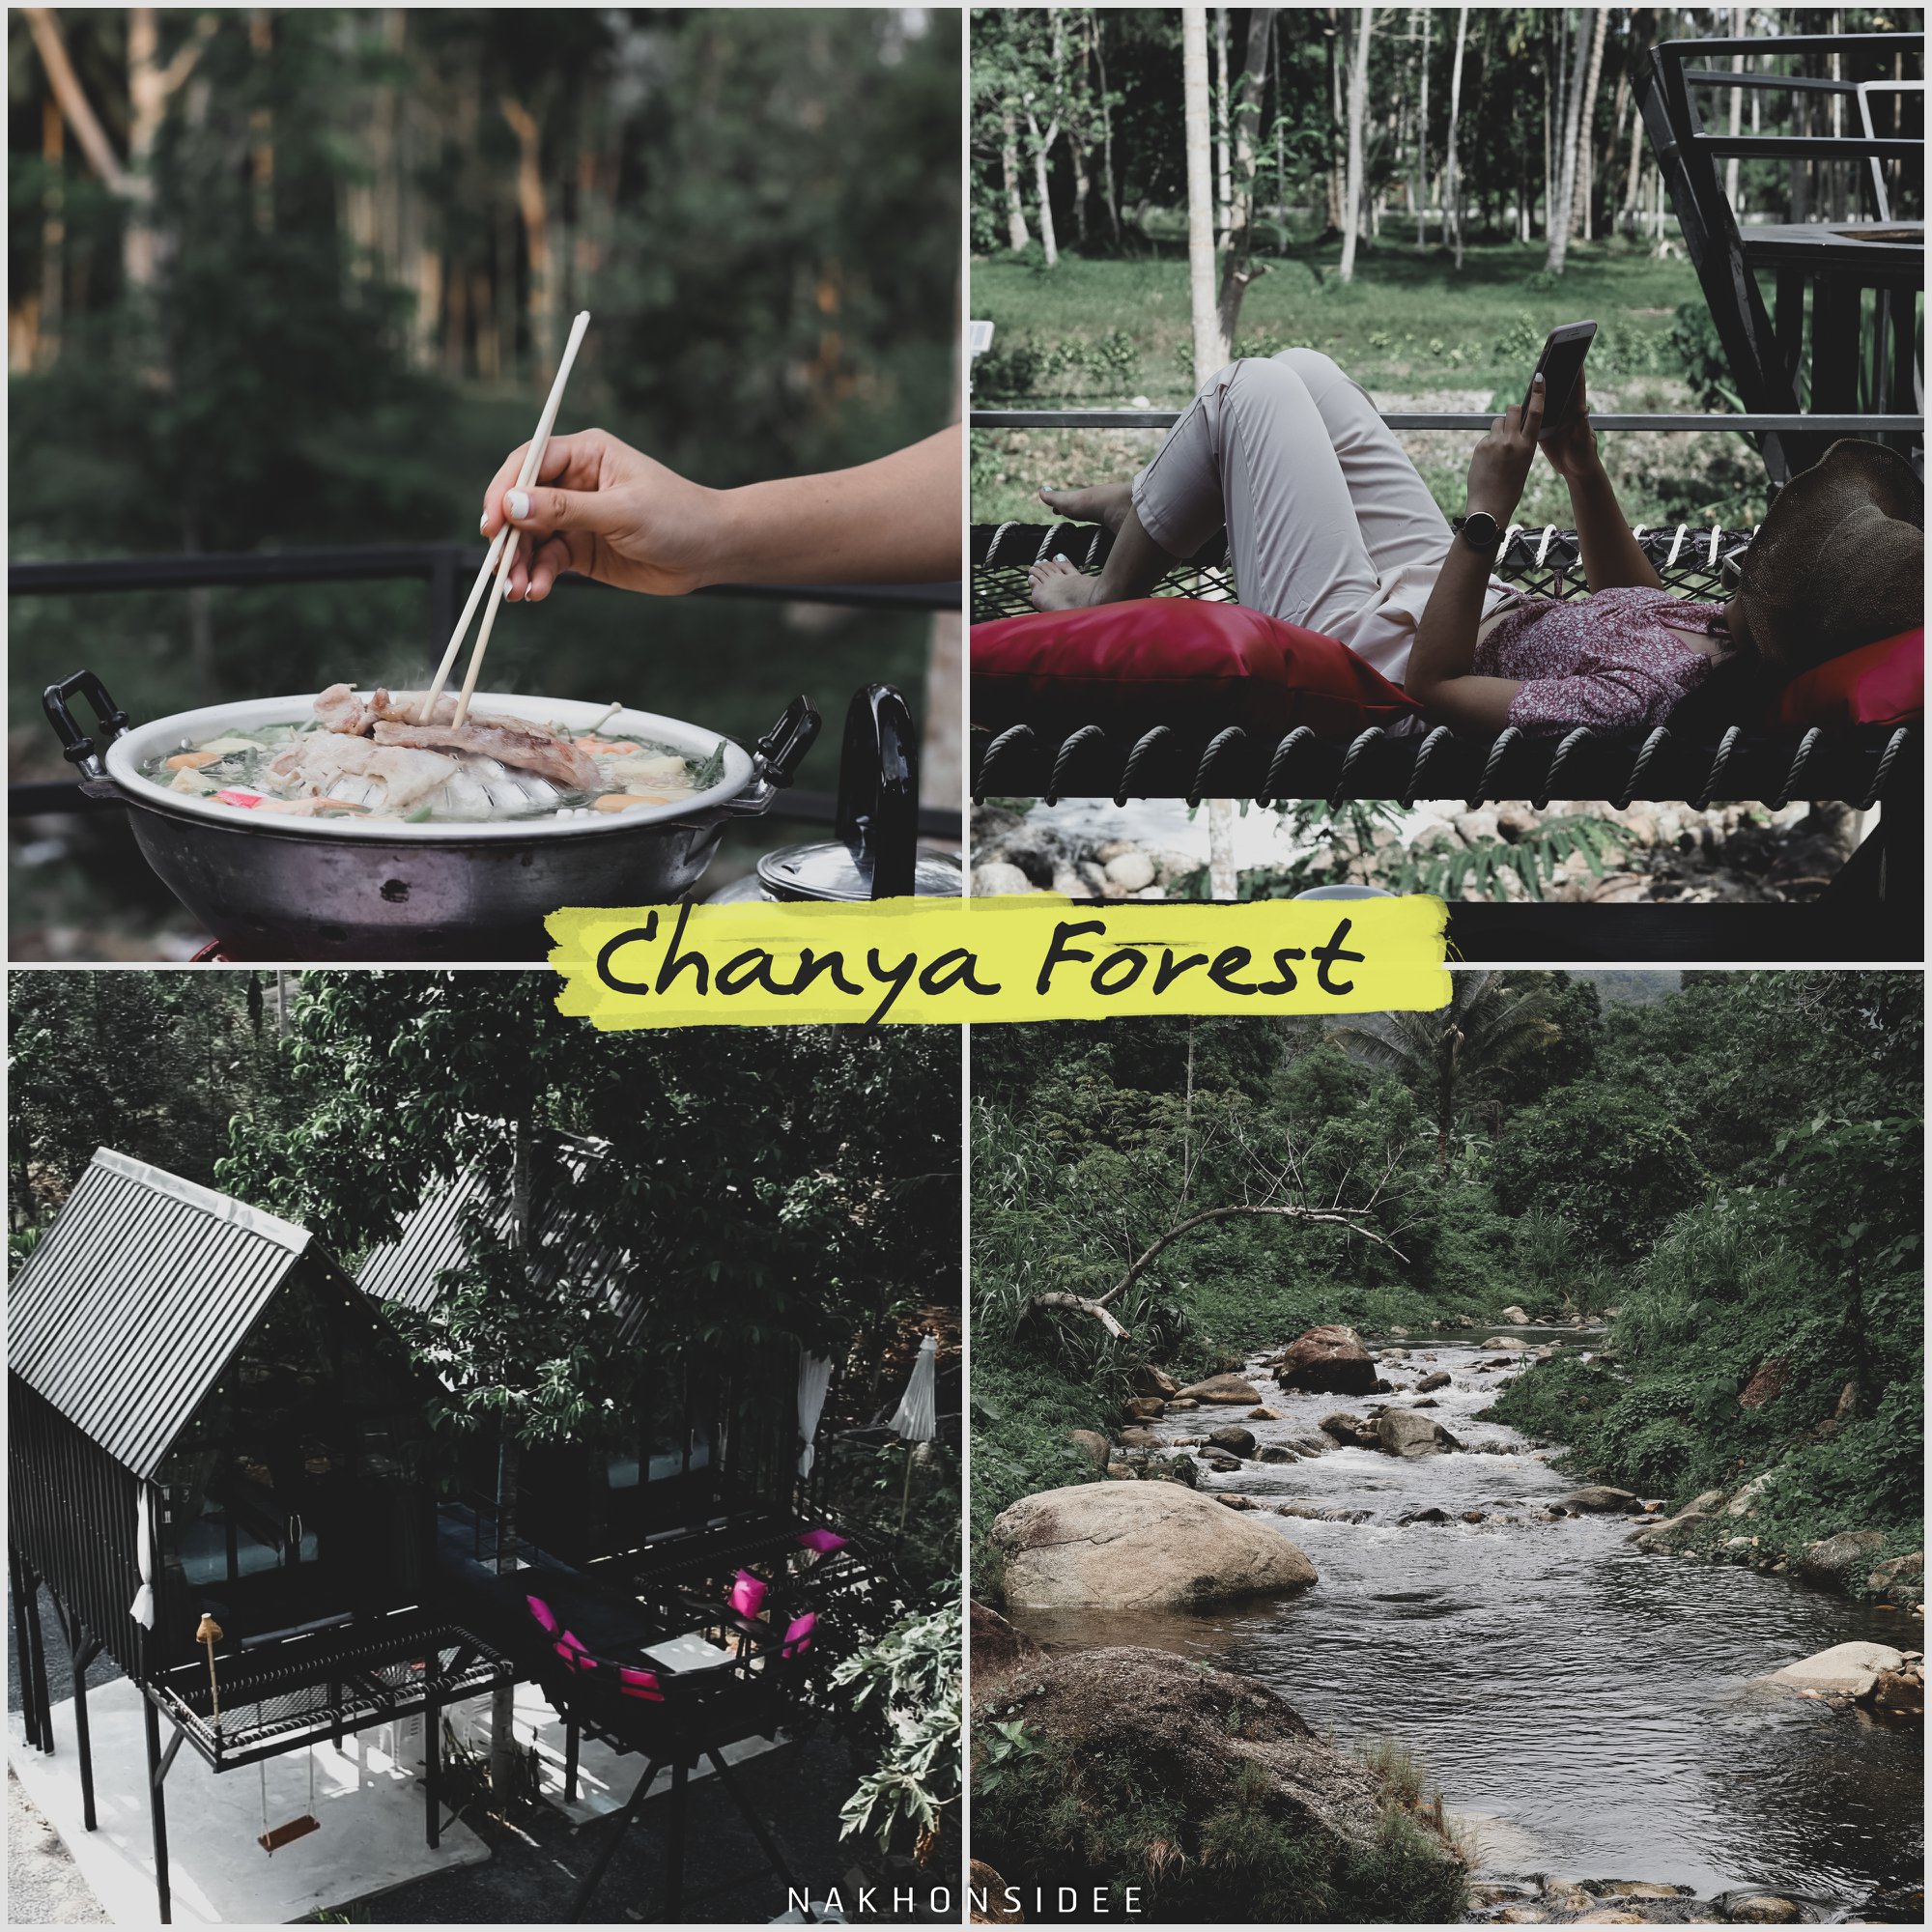  Chanya-Forest-ที่สุดแห่งที่พักริมลำธาร-เพราะอยู่ติดริมลำธารแบบที่สุด-น้ำใสกิ๊งยิ่งกว่าน้ำตกอีกกก-ปิ้งย่างน้ำจิ้มหร่อยมวากก-10/10
คลิกที่นี่ ช้างกลาง,นครศรีธรรมราช,วิวหลักล้าน,กลางป่า